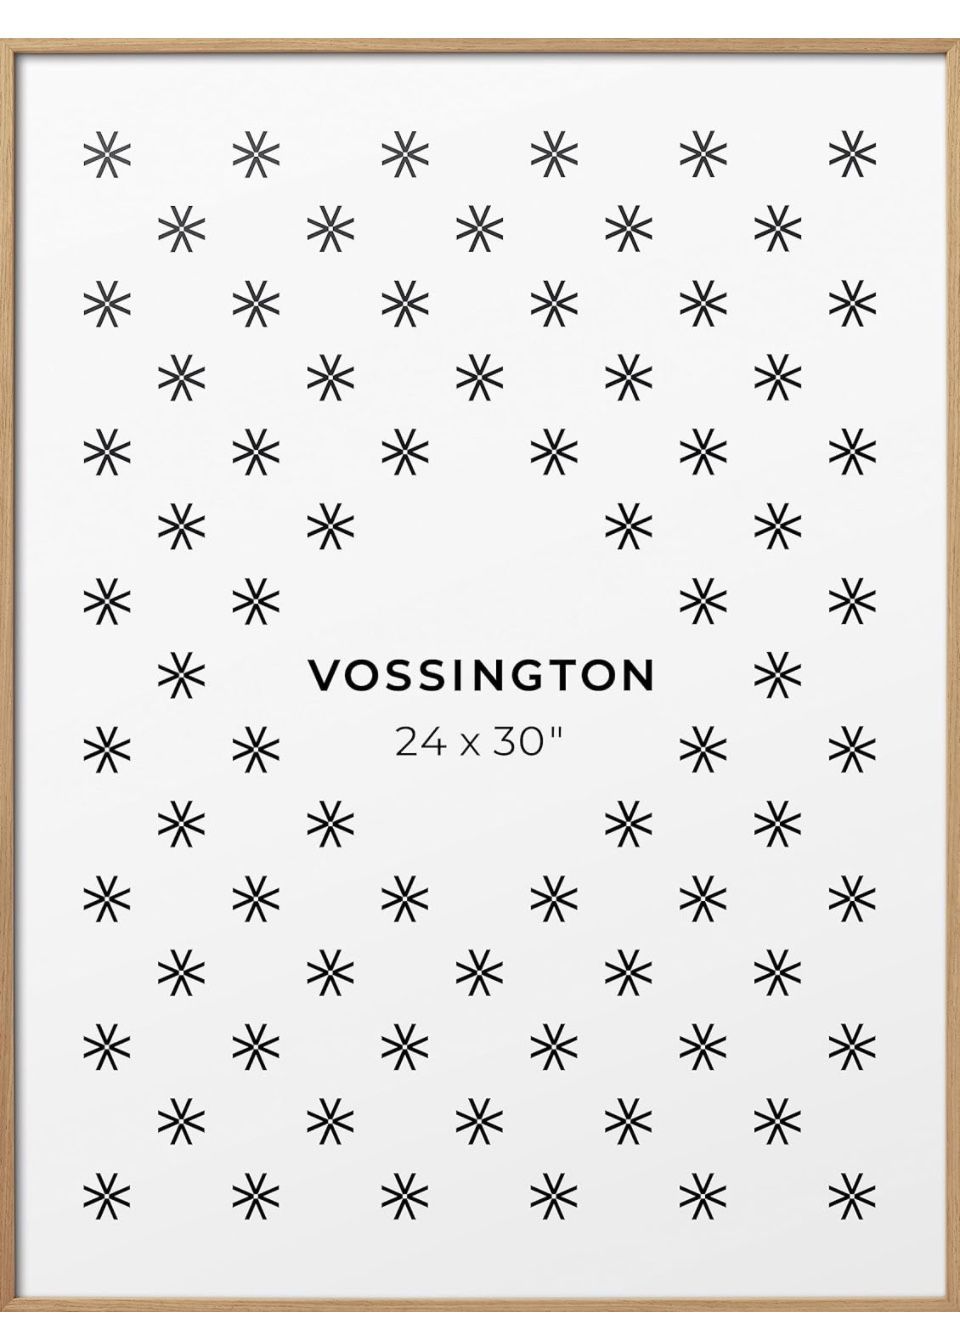 Vossington Thin 24x30 Poster Frame - Light Oak Frame Color (Real Wood Grain Finish) - Slim & Modern Frame Design - Fits 1 Picture, Art Print, Puzzle